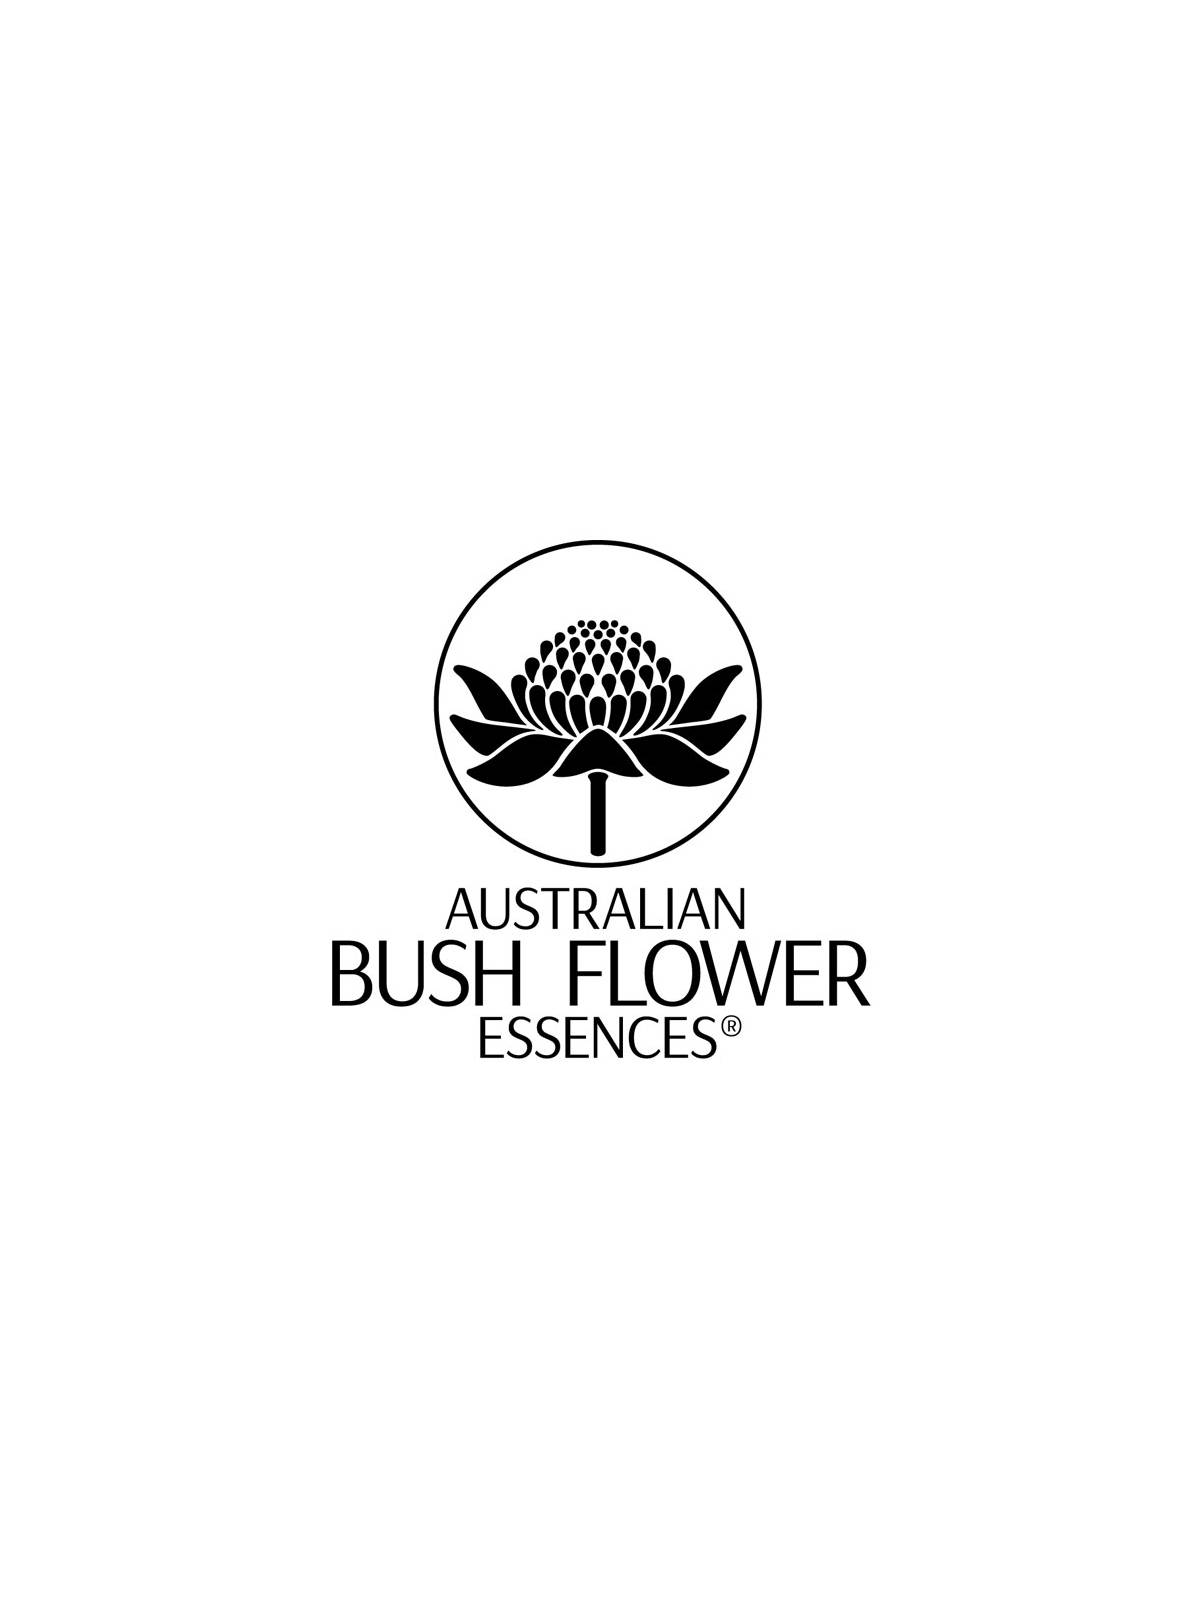 fiori australiani originale Australian Bush Flower Essences